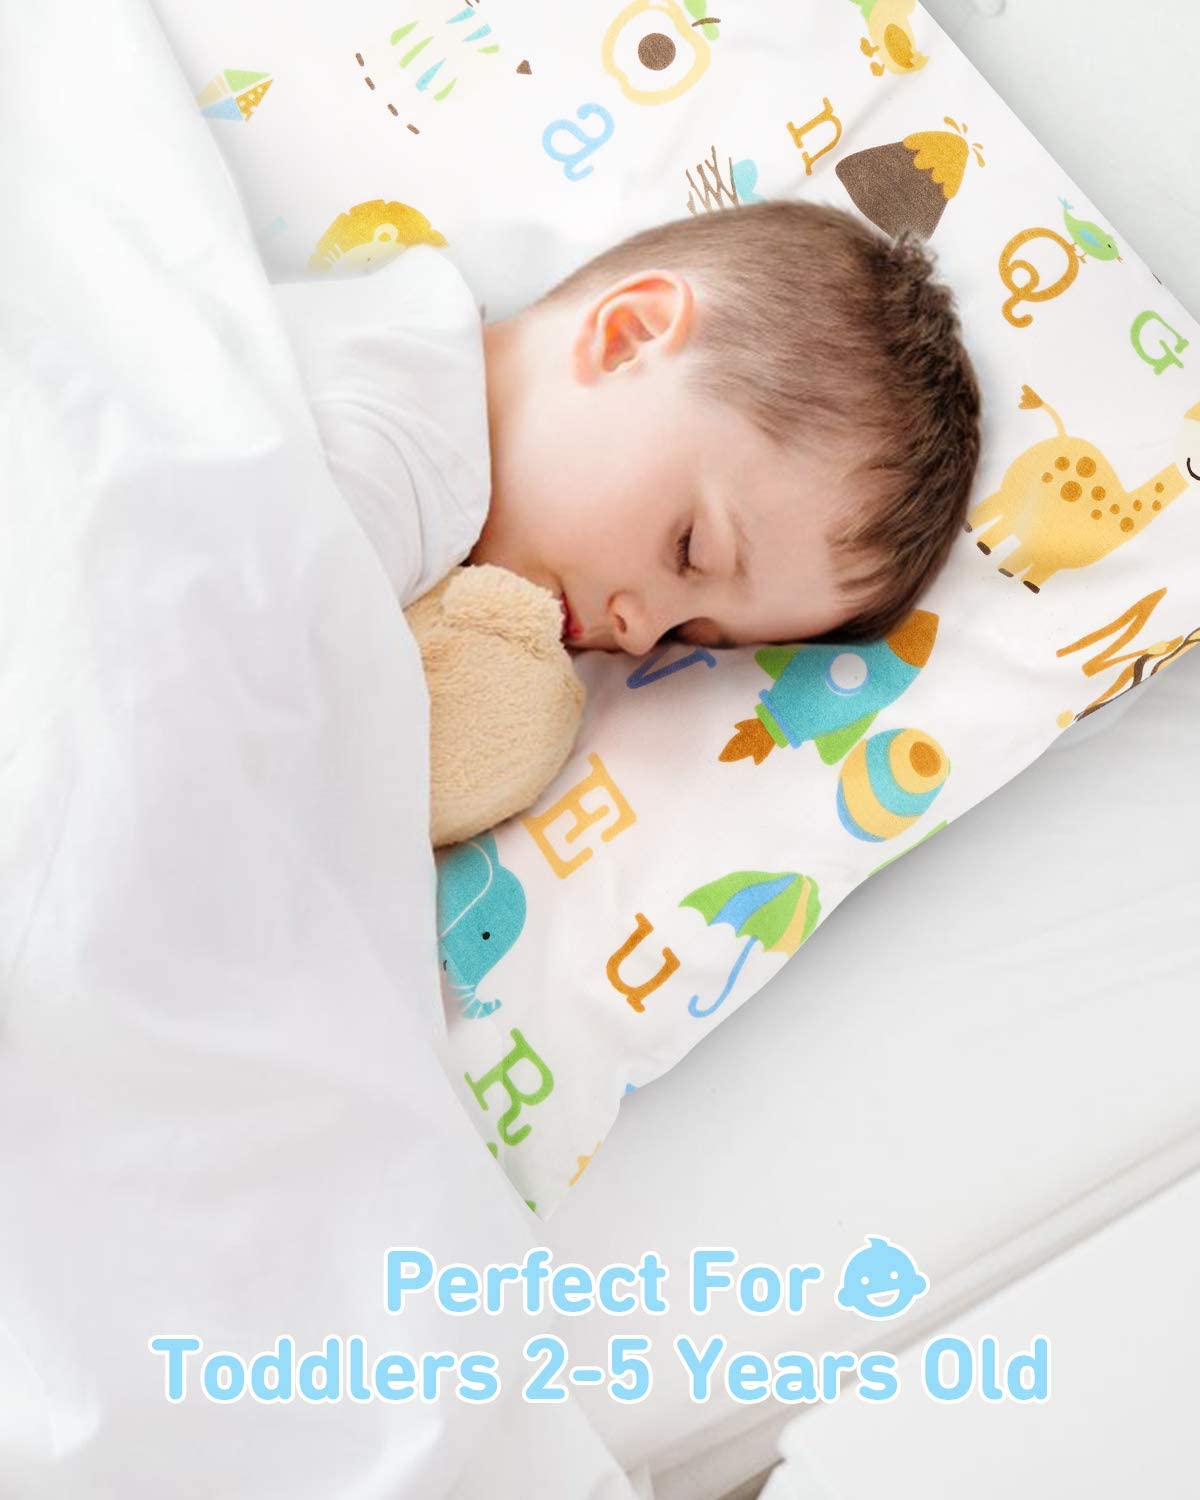 Babebay Toddler Pillow,13 x 18 Inch Kids Pillows for Sleeping,1 PACK